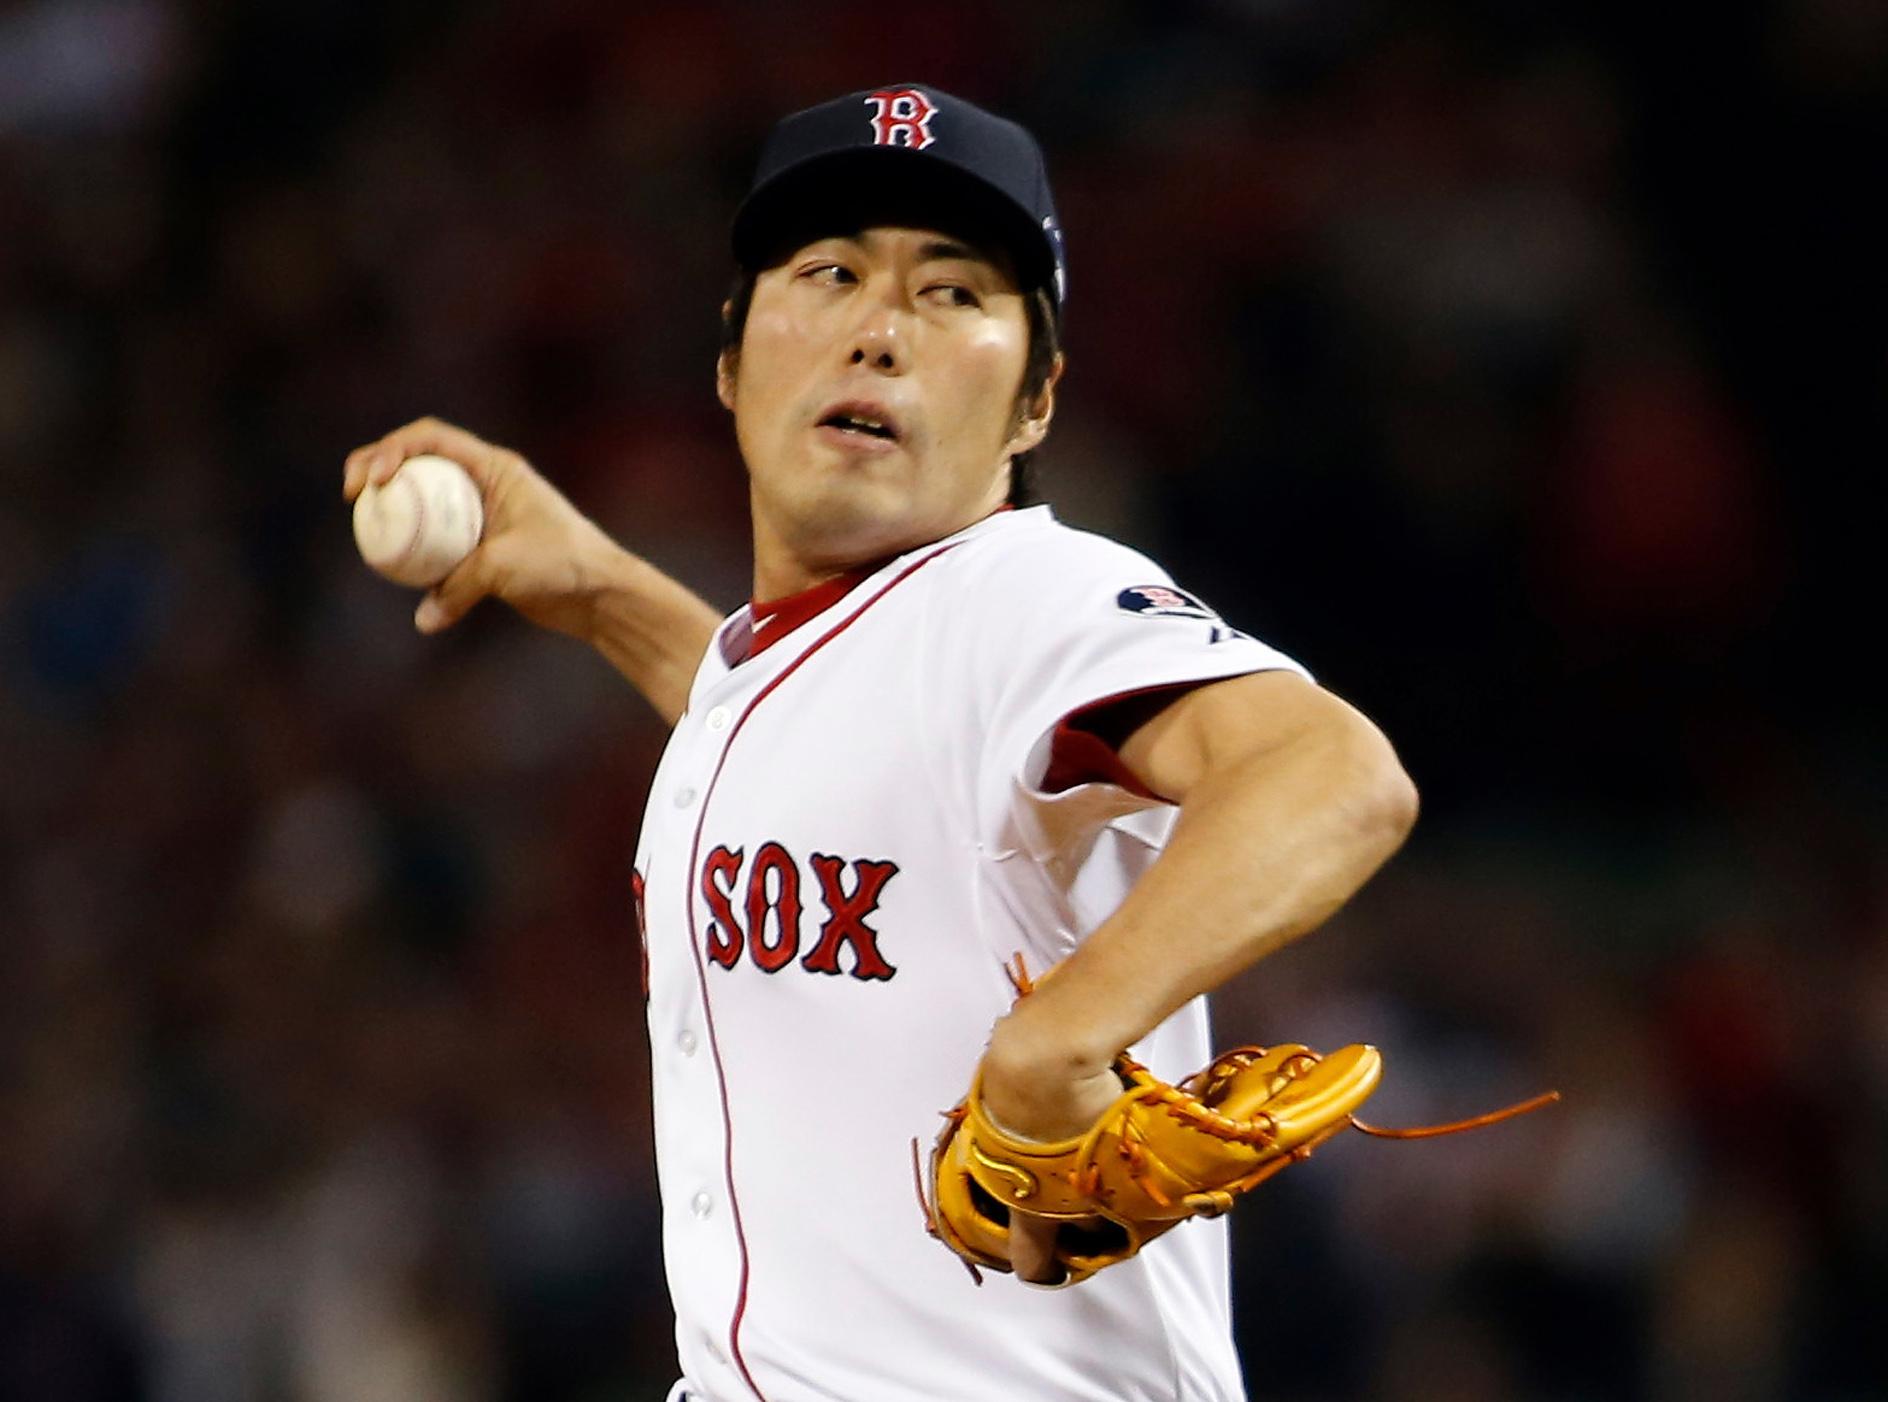 Boston Red Sox relief pitcher Koji Uehara